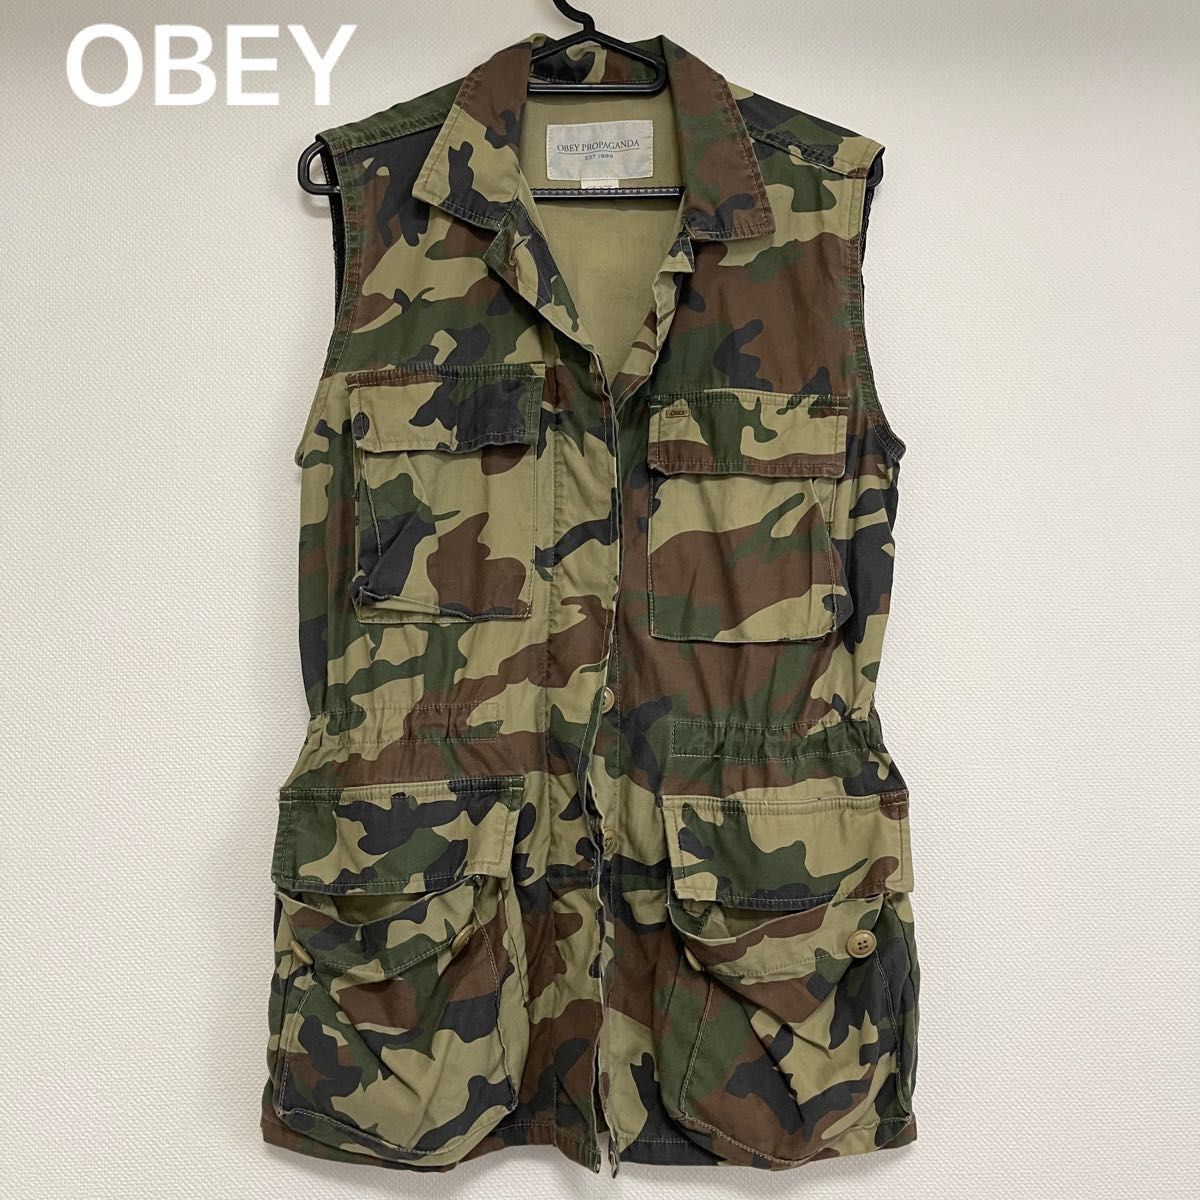 【OBEY】袖なし迷彩ジャケット ベスト アメリカストリートファッションブランド ビンテージ ミリタリーベスト 男女兼用